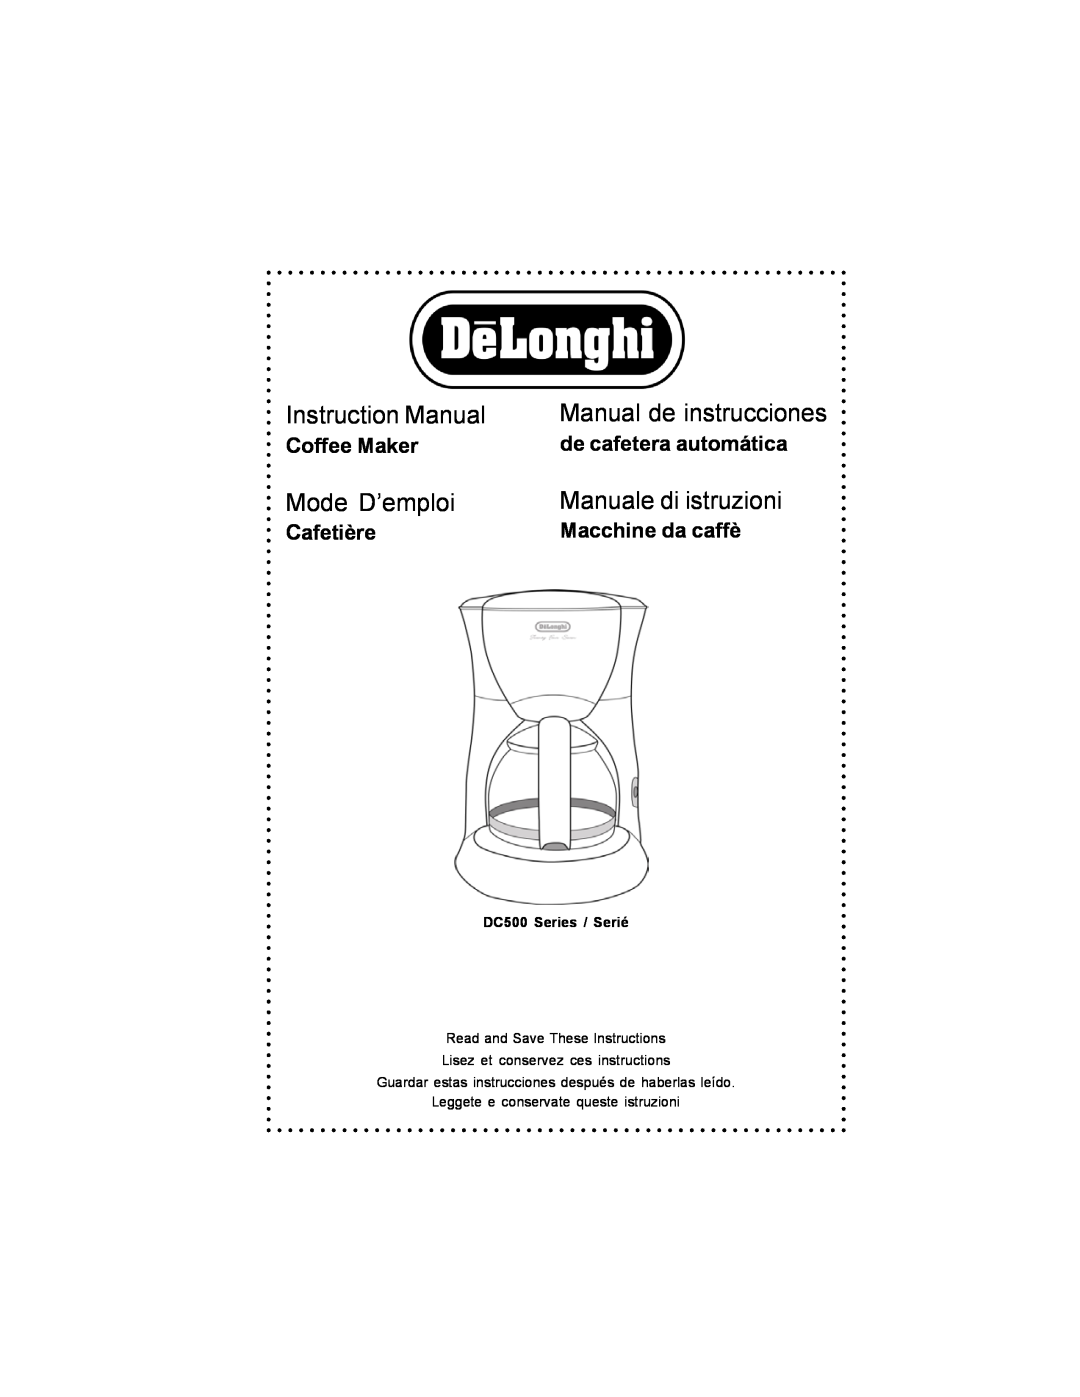 DeLonghi DC500 instruction manual Coffee Maker, de cafetera automática, Cafetière, Macchine da caffè, Instruction Manual 